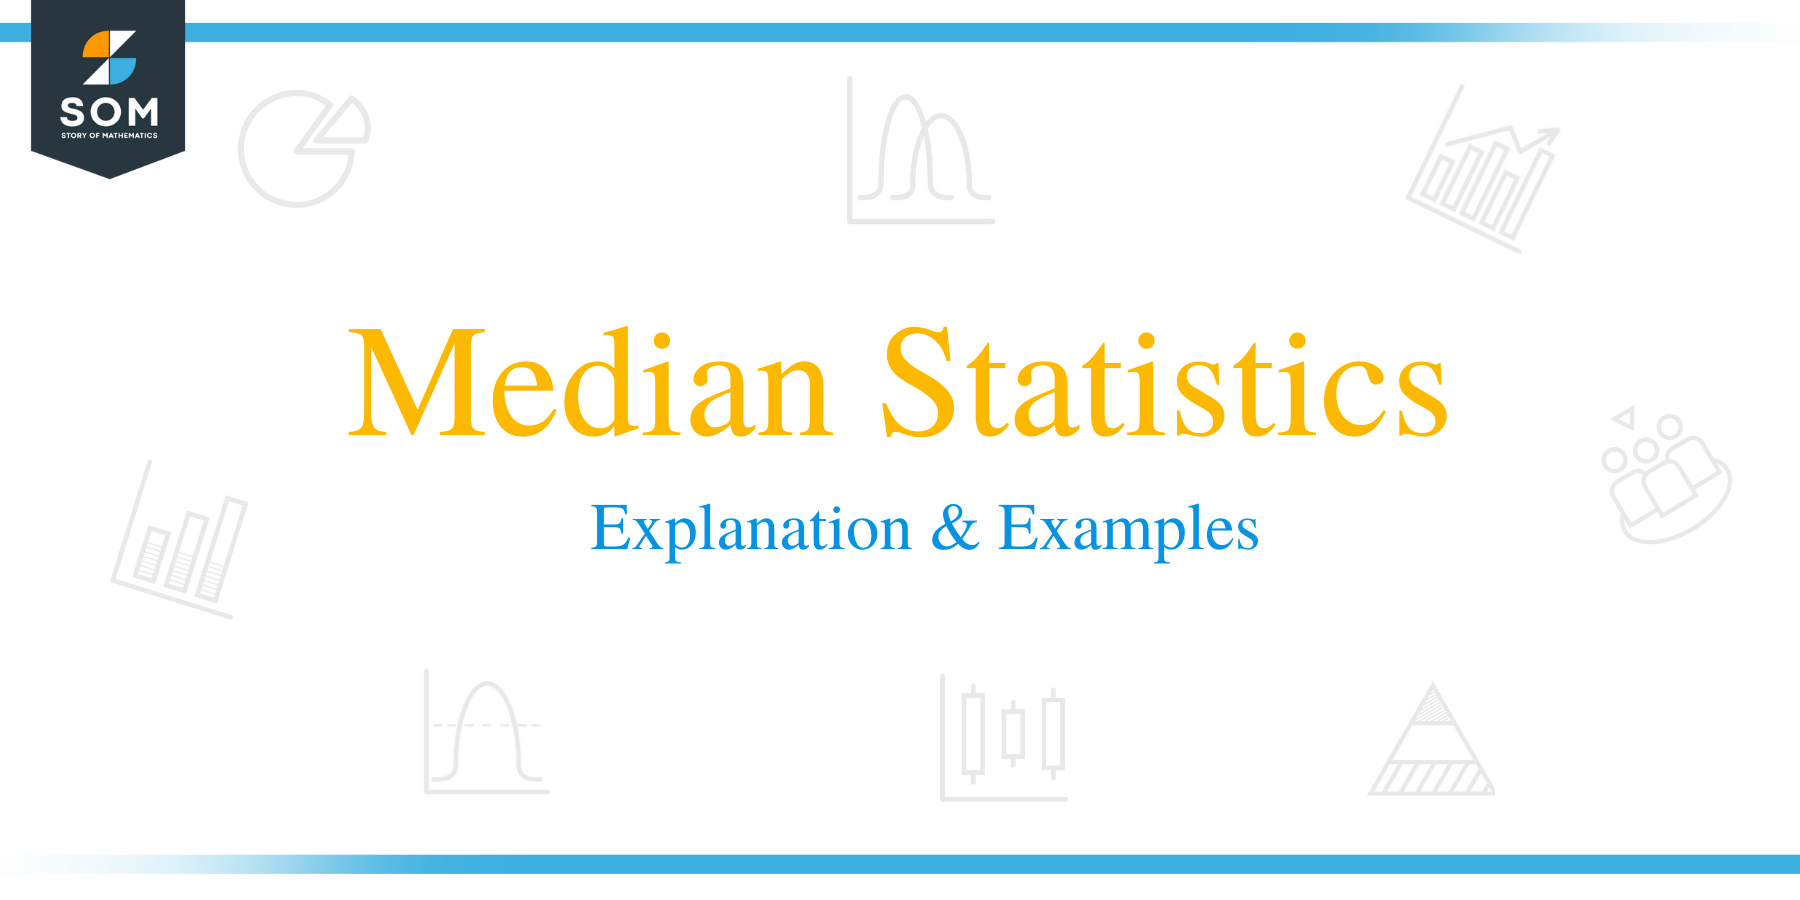 Median statistics